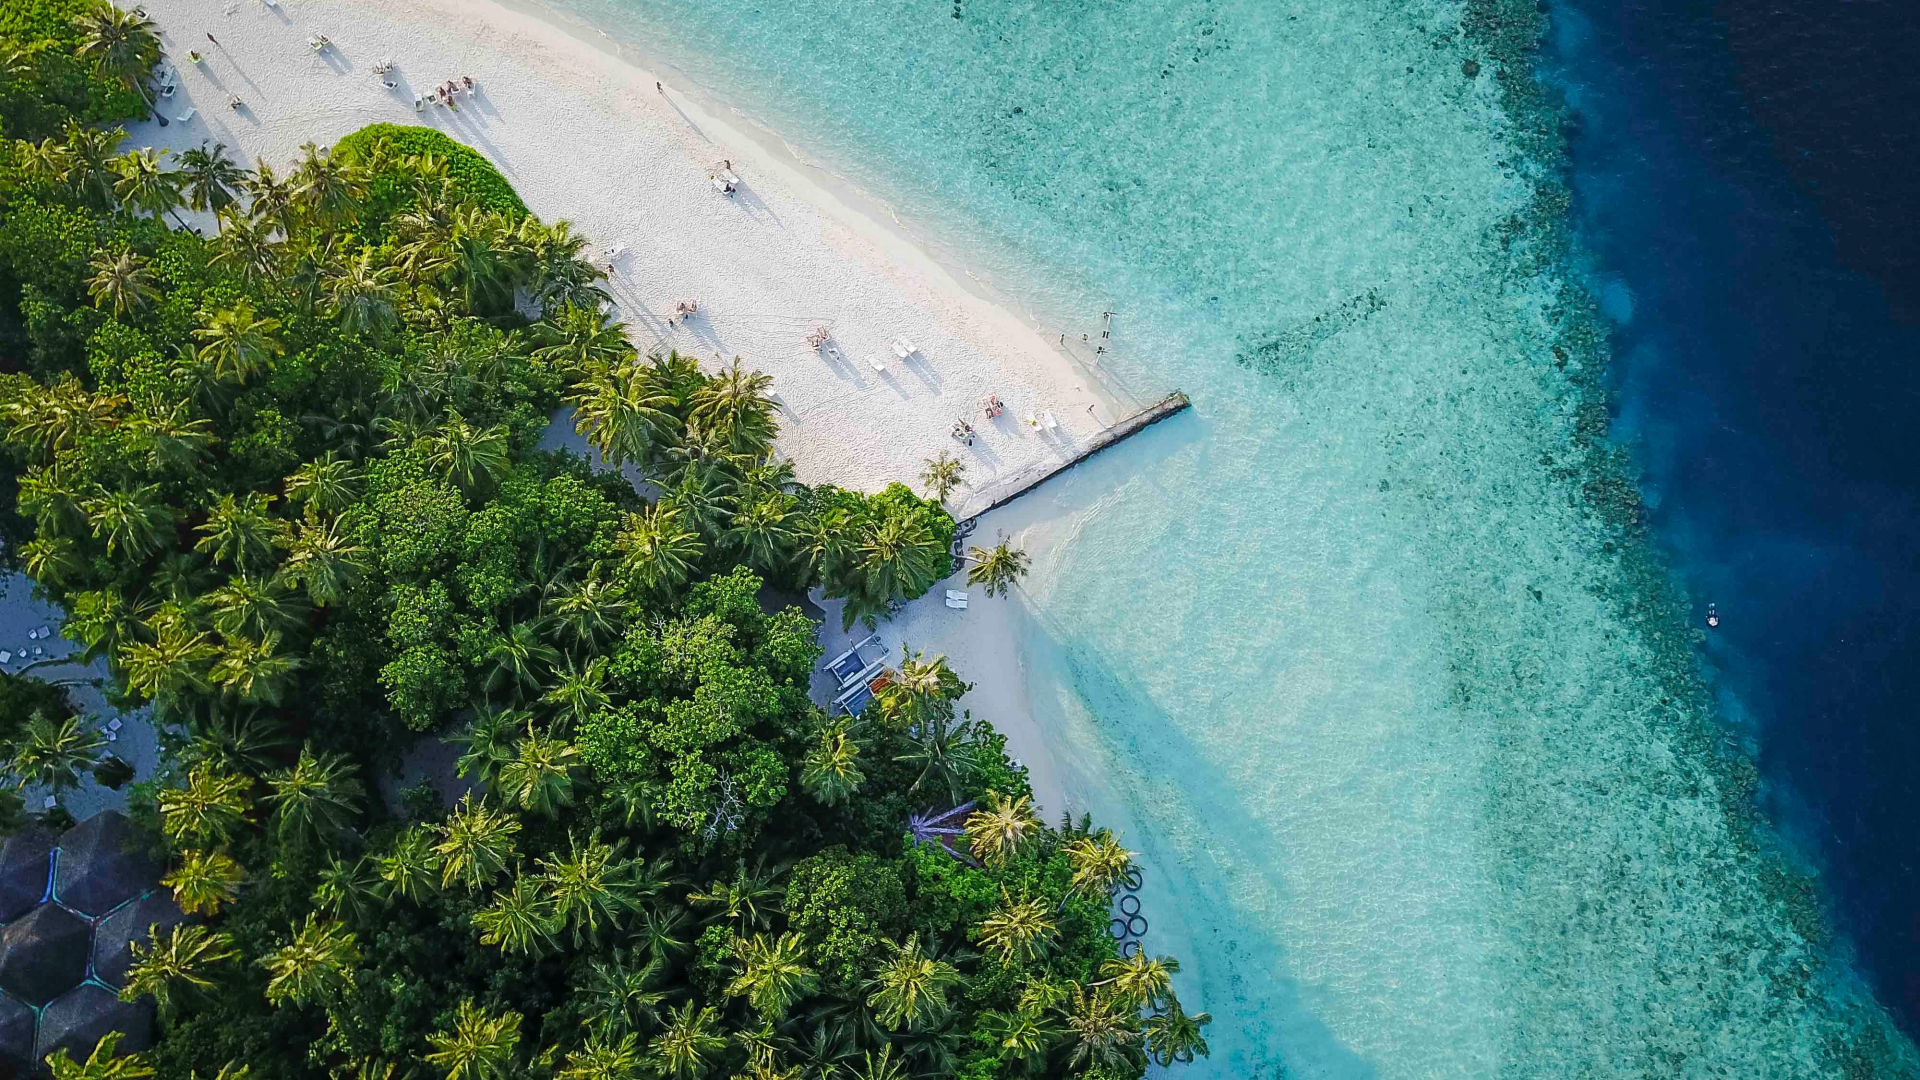 Download 1920x1080 wallpaper maldives, island, tropical, aerial view